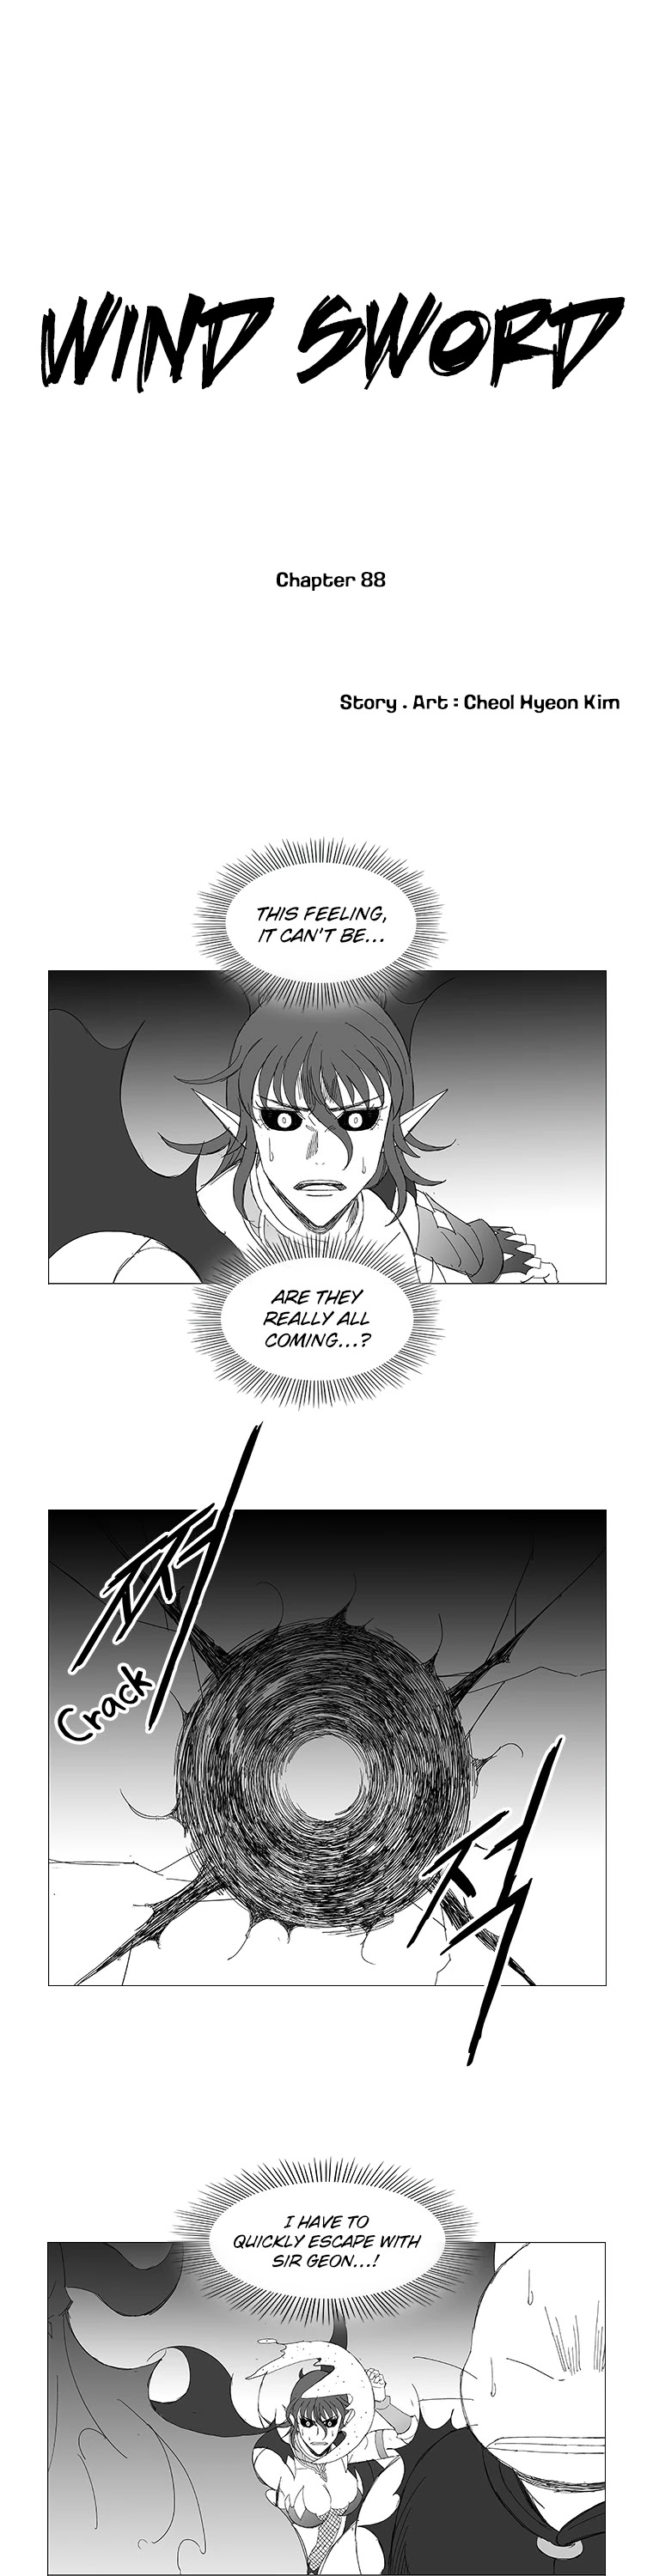 Wind Sword - Page 2